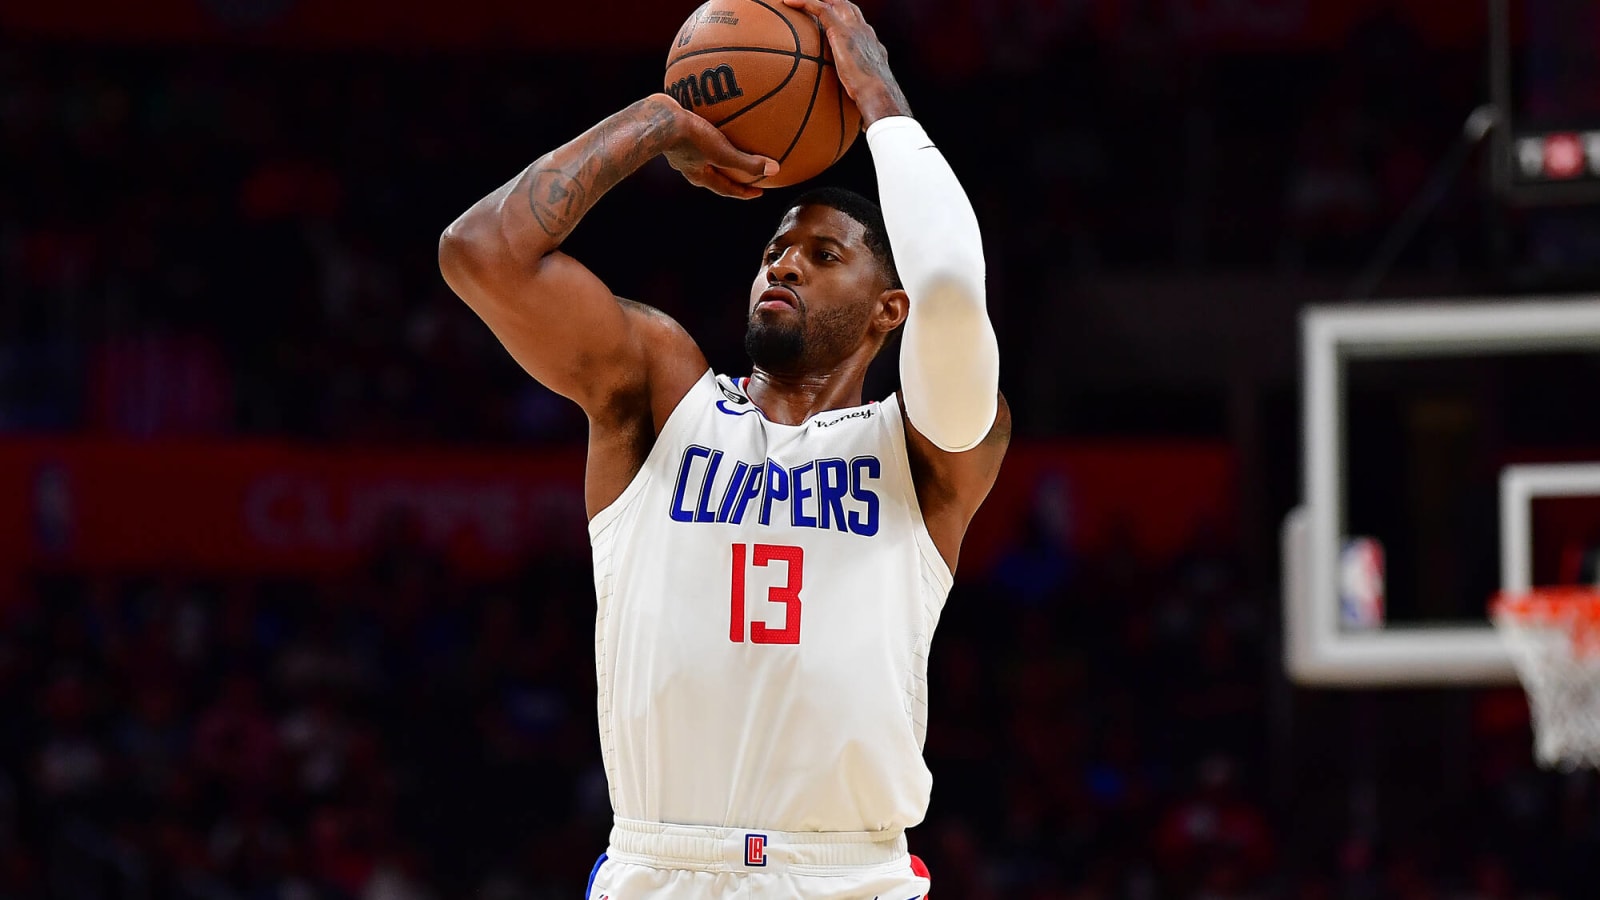 Clippers' Paul George credits impressive NBA return on “new shoulders”